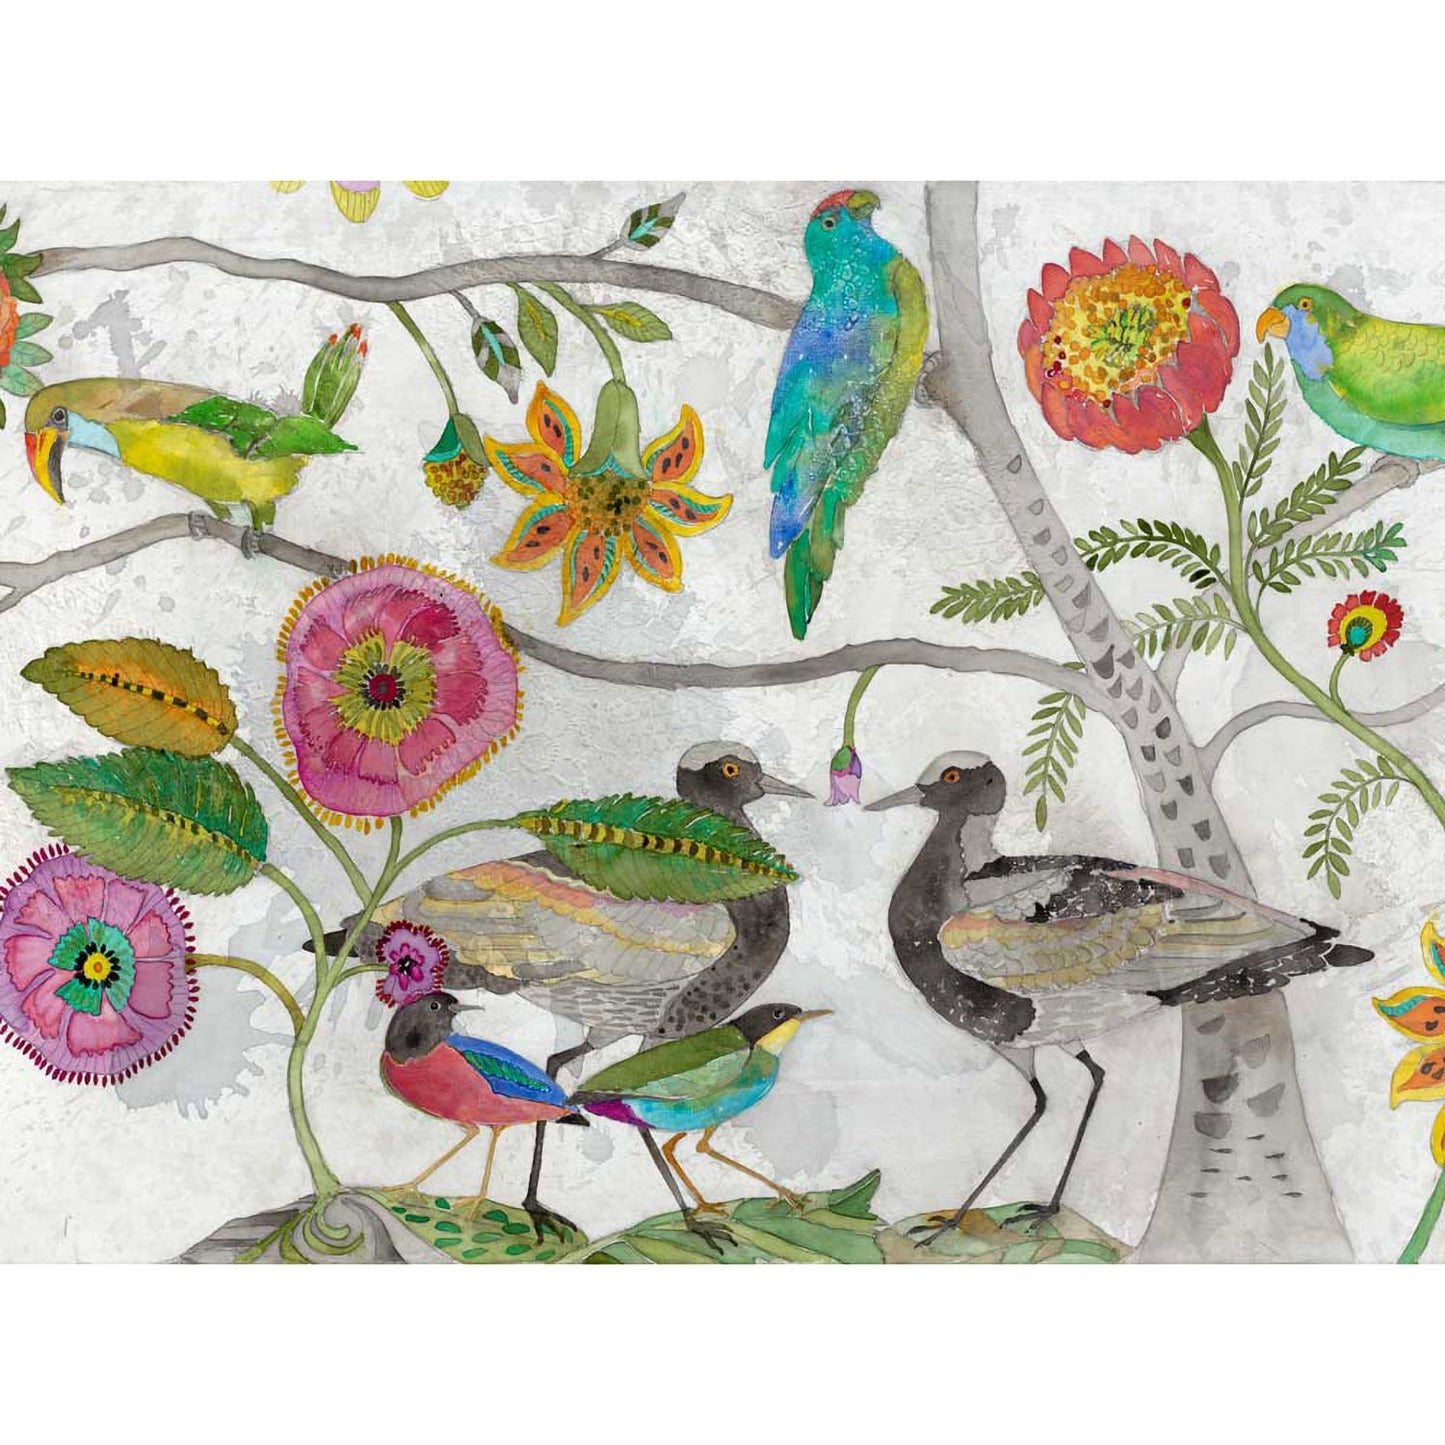 Tropical Birds - Full Color - 2 Canvas Wall Art